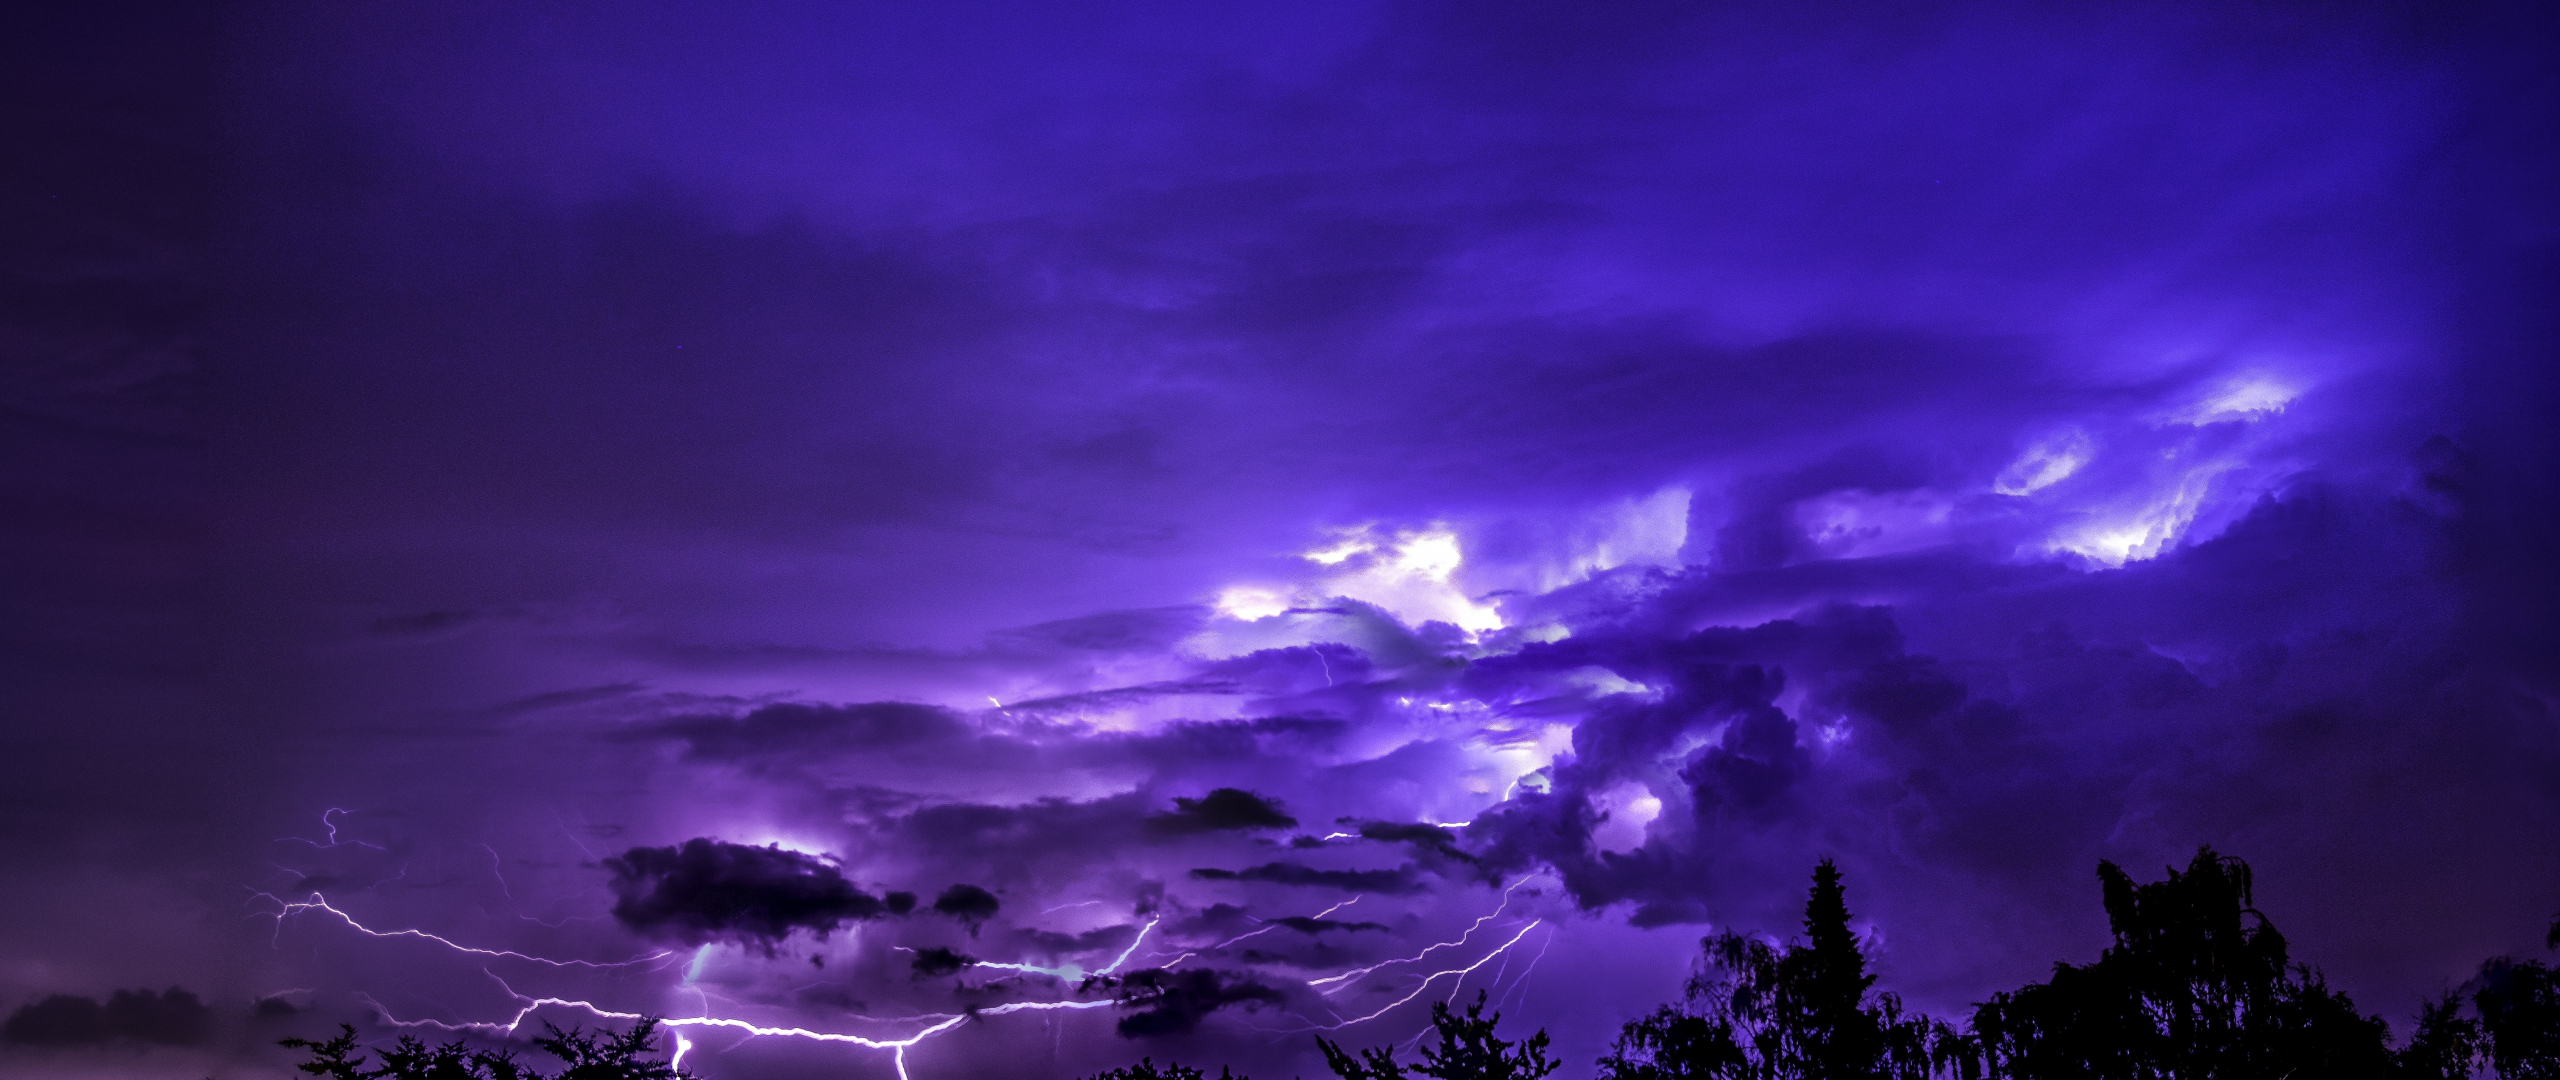 2560x1080 Download thunderstorm, lightnings, sky, dark wallpaper, dual wide hd image, background, 15739